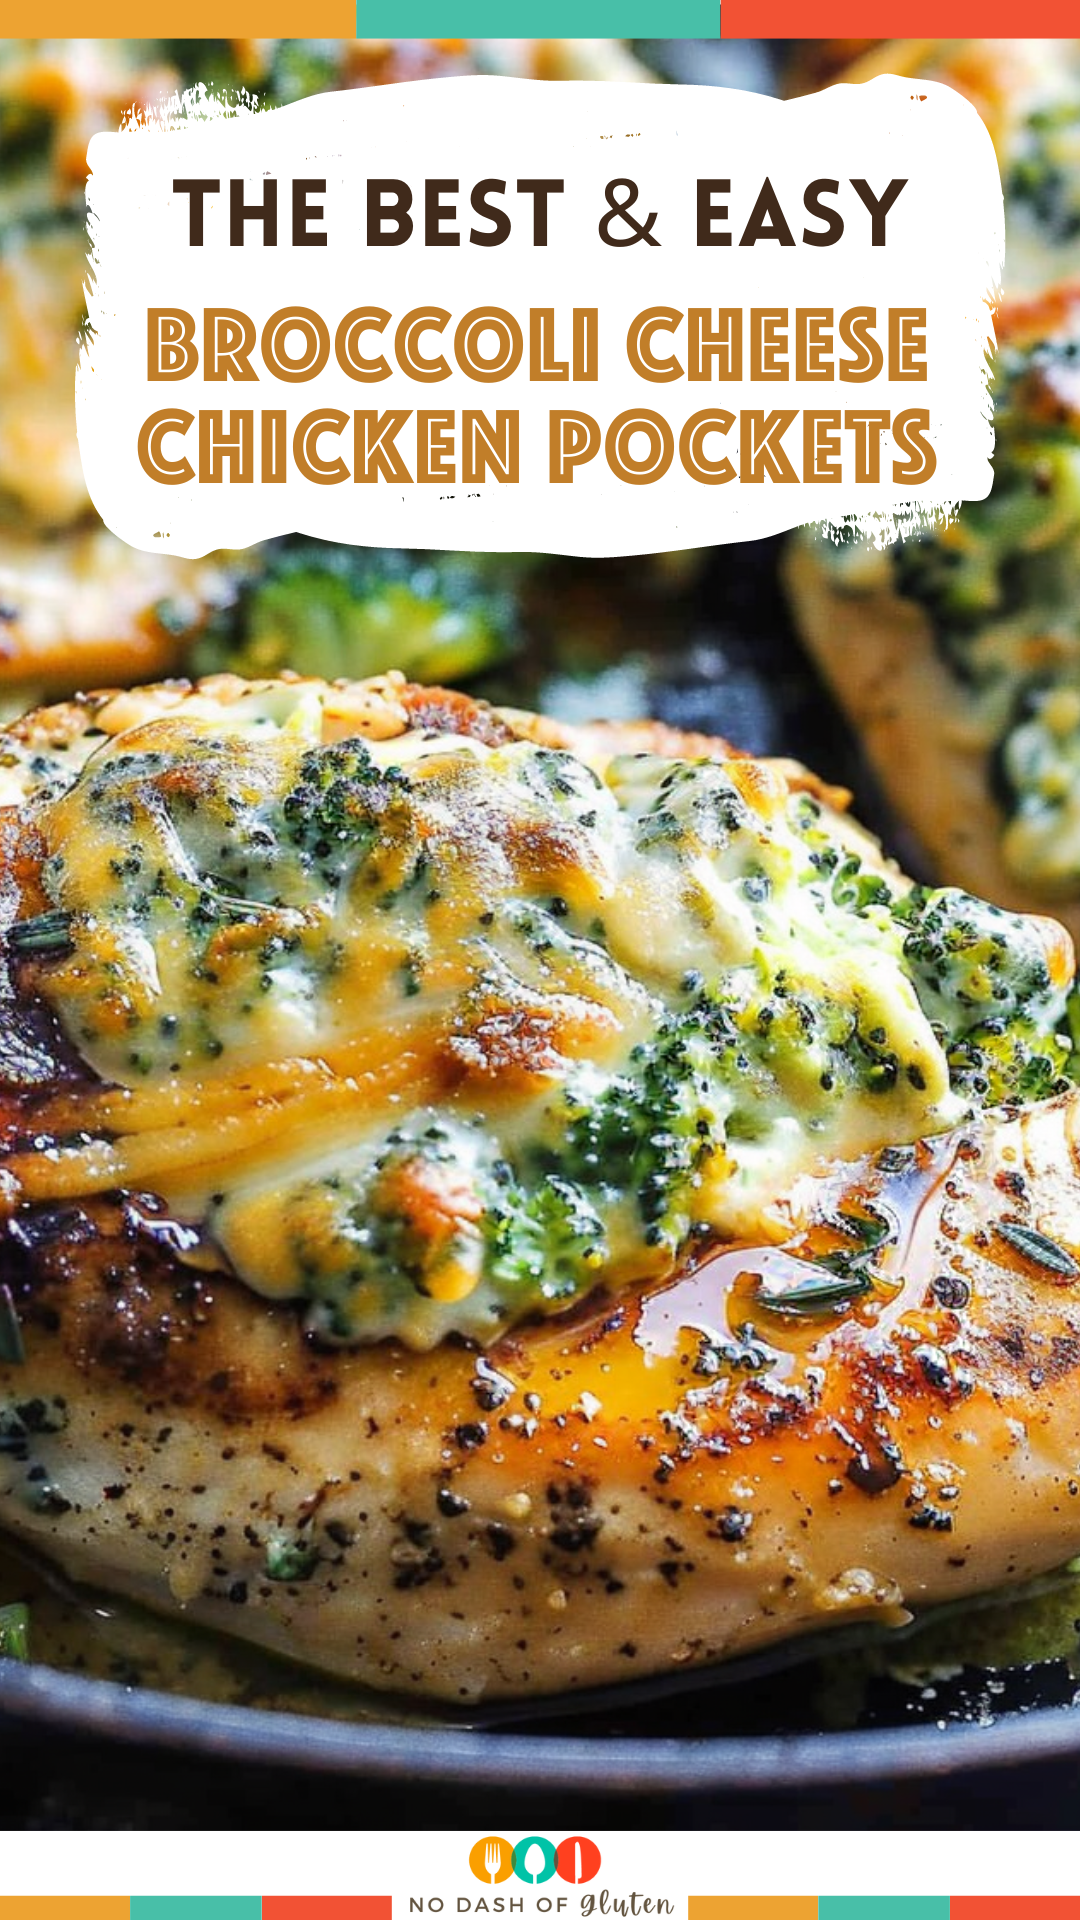 Broccoli Cheese Chicken Pockets